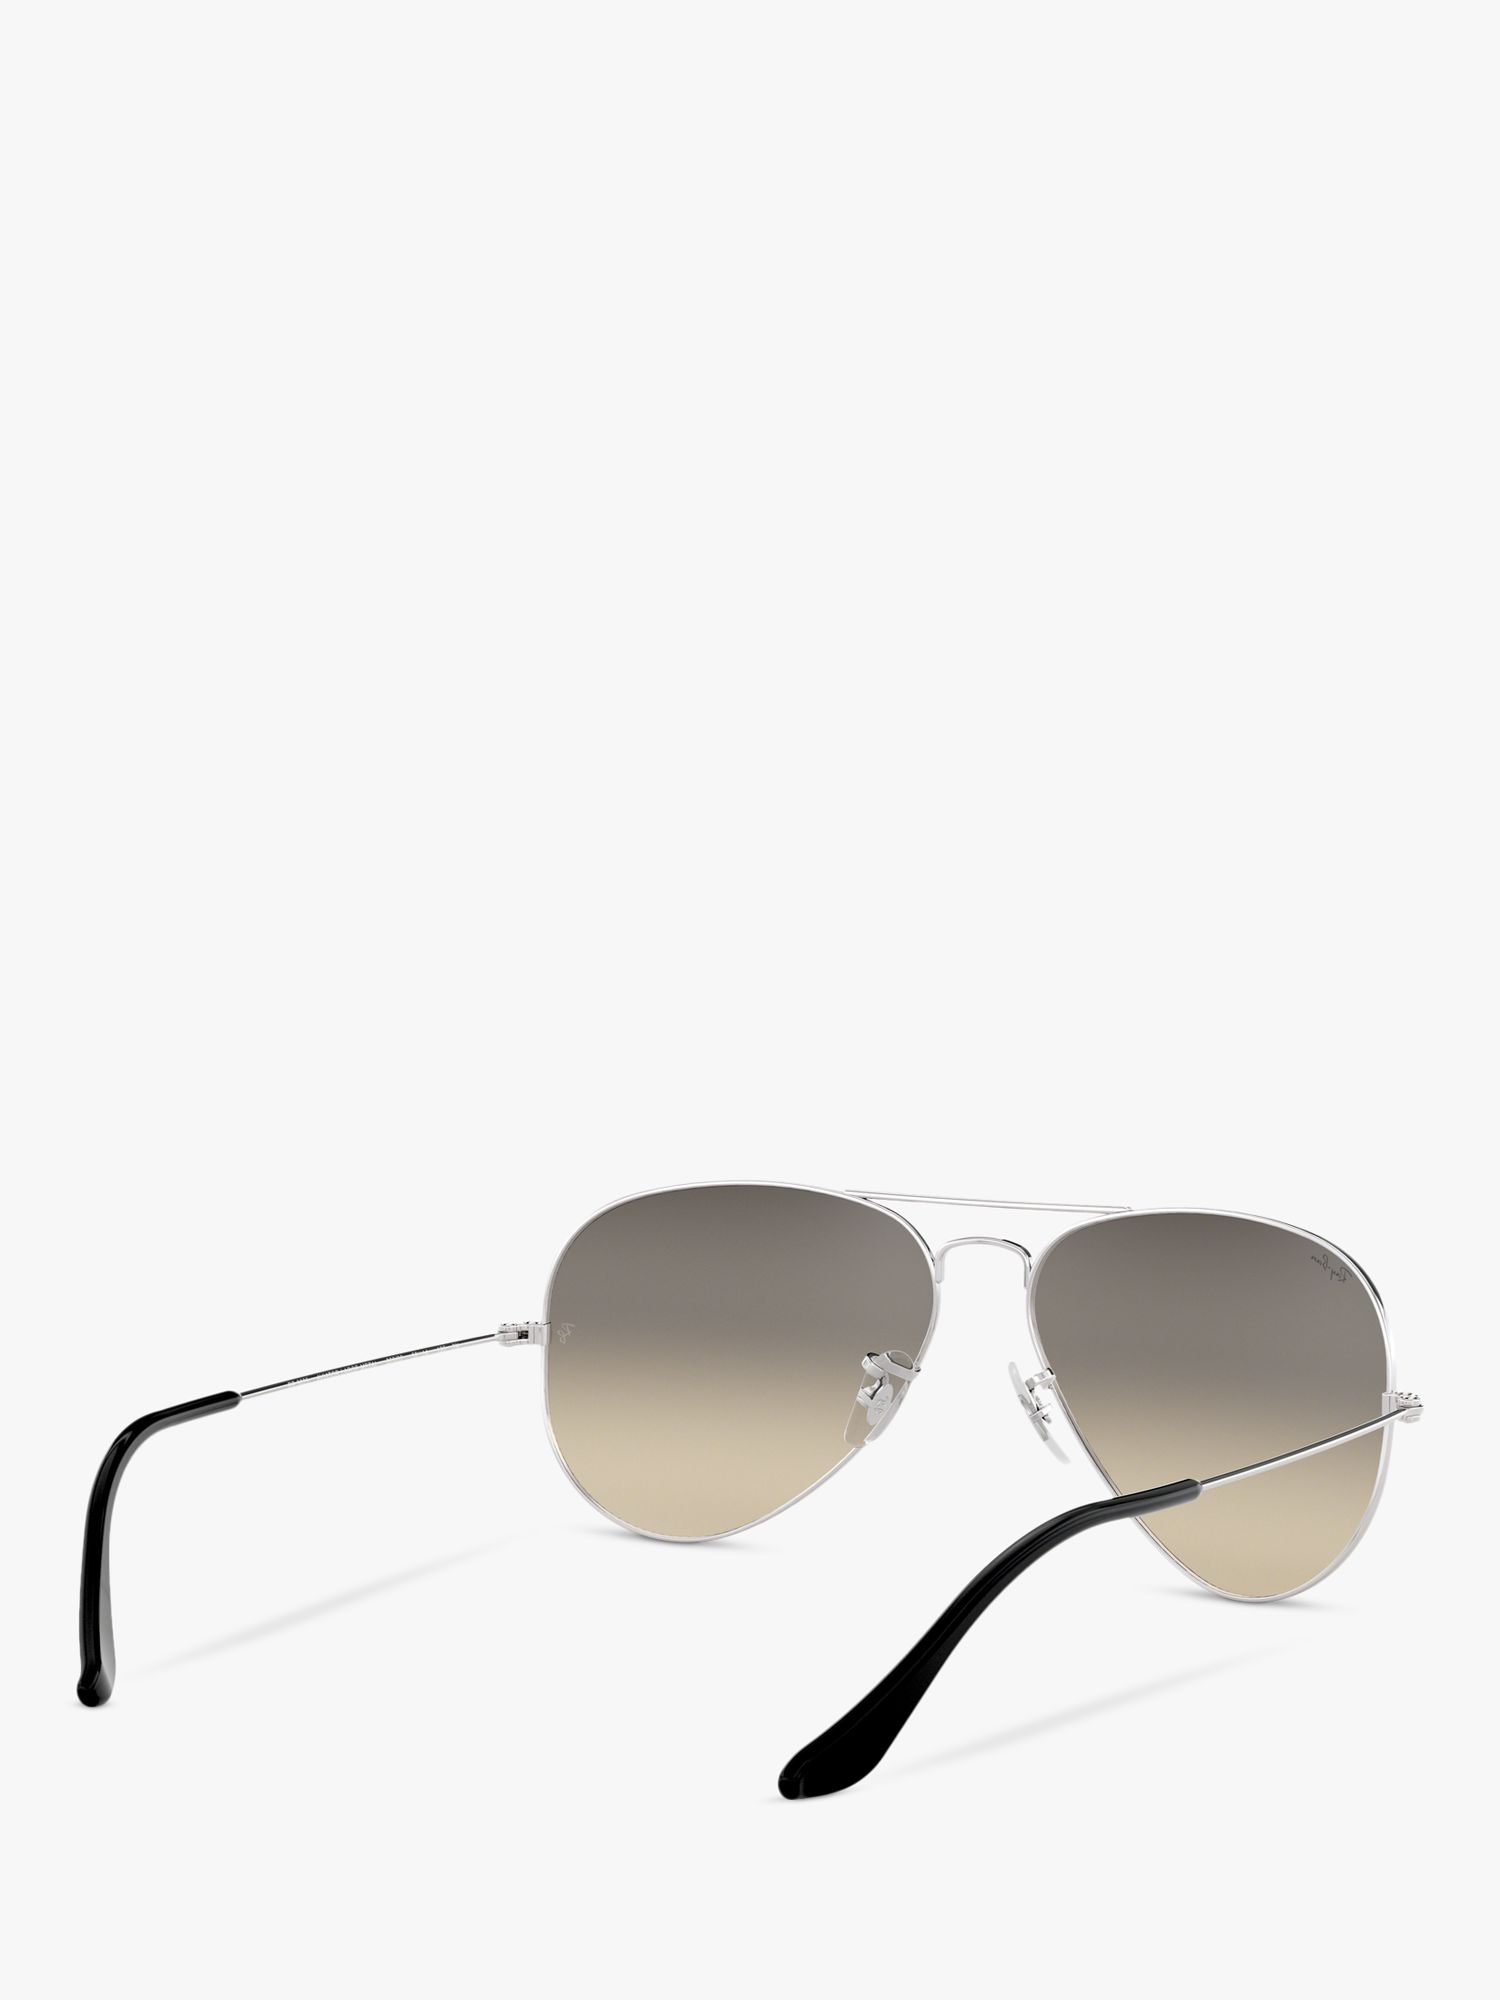 Ray-Ban RB3025 Men's Original Aviator Sunglasses, Silver/Grey Gradient ...